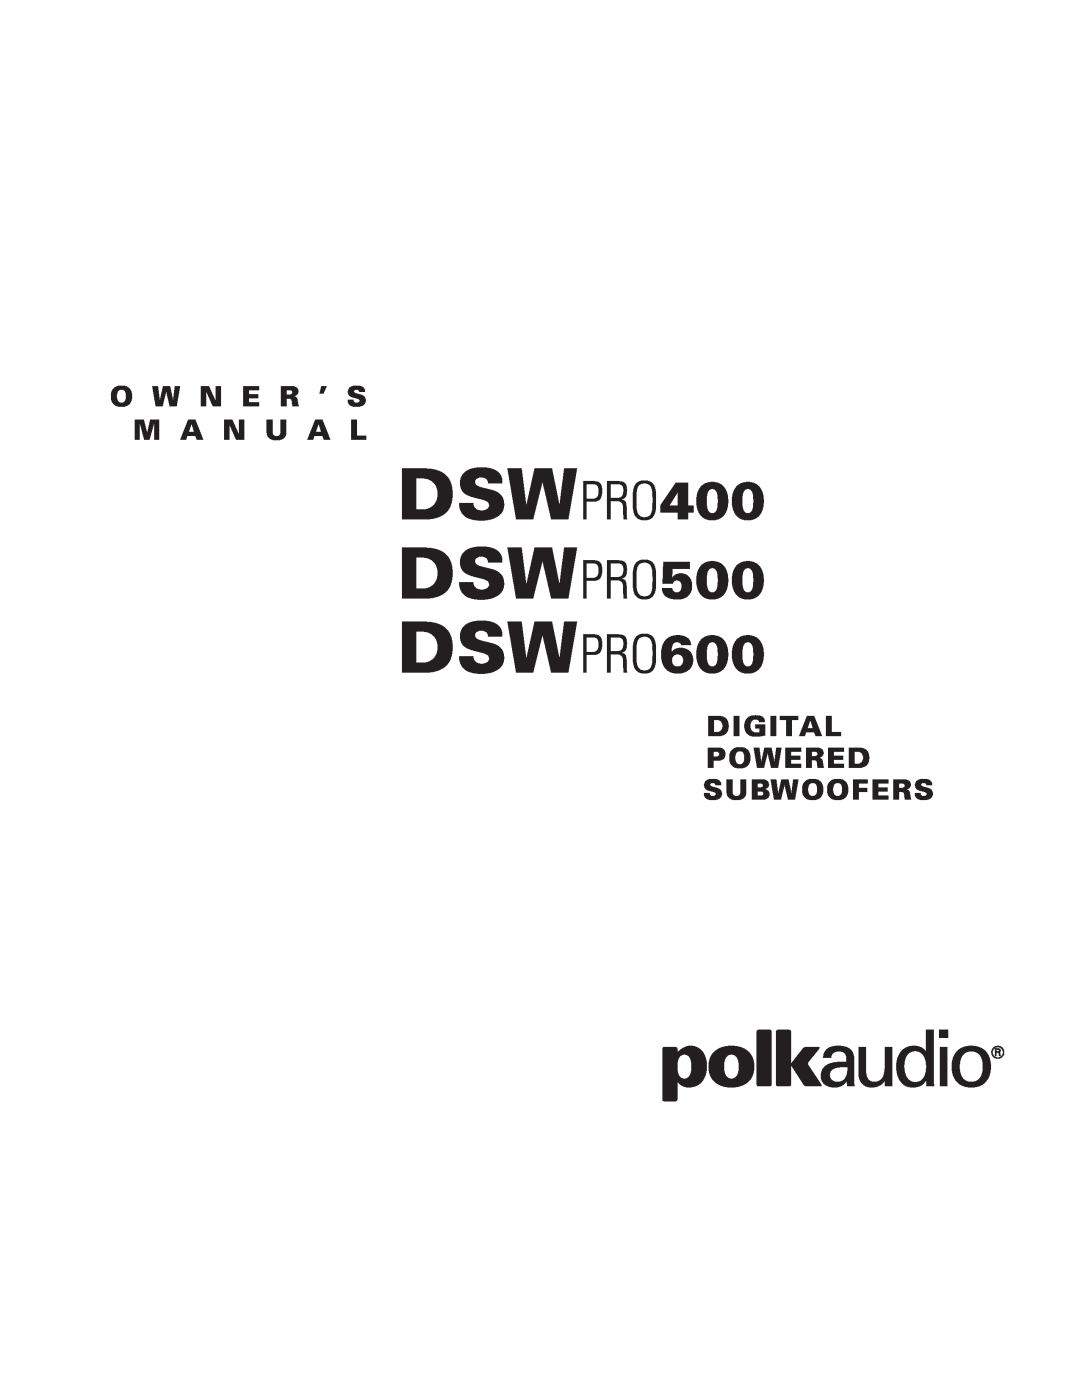 Polk Audio owner manual DSWPRO400 DSWPRO500 DSWPRO600, O W N E R ’ S M A N U A L, Digital Powered Subwoofers 